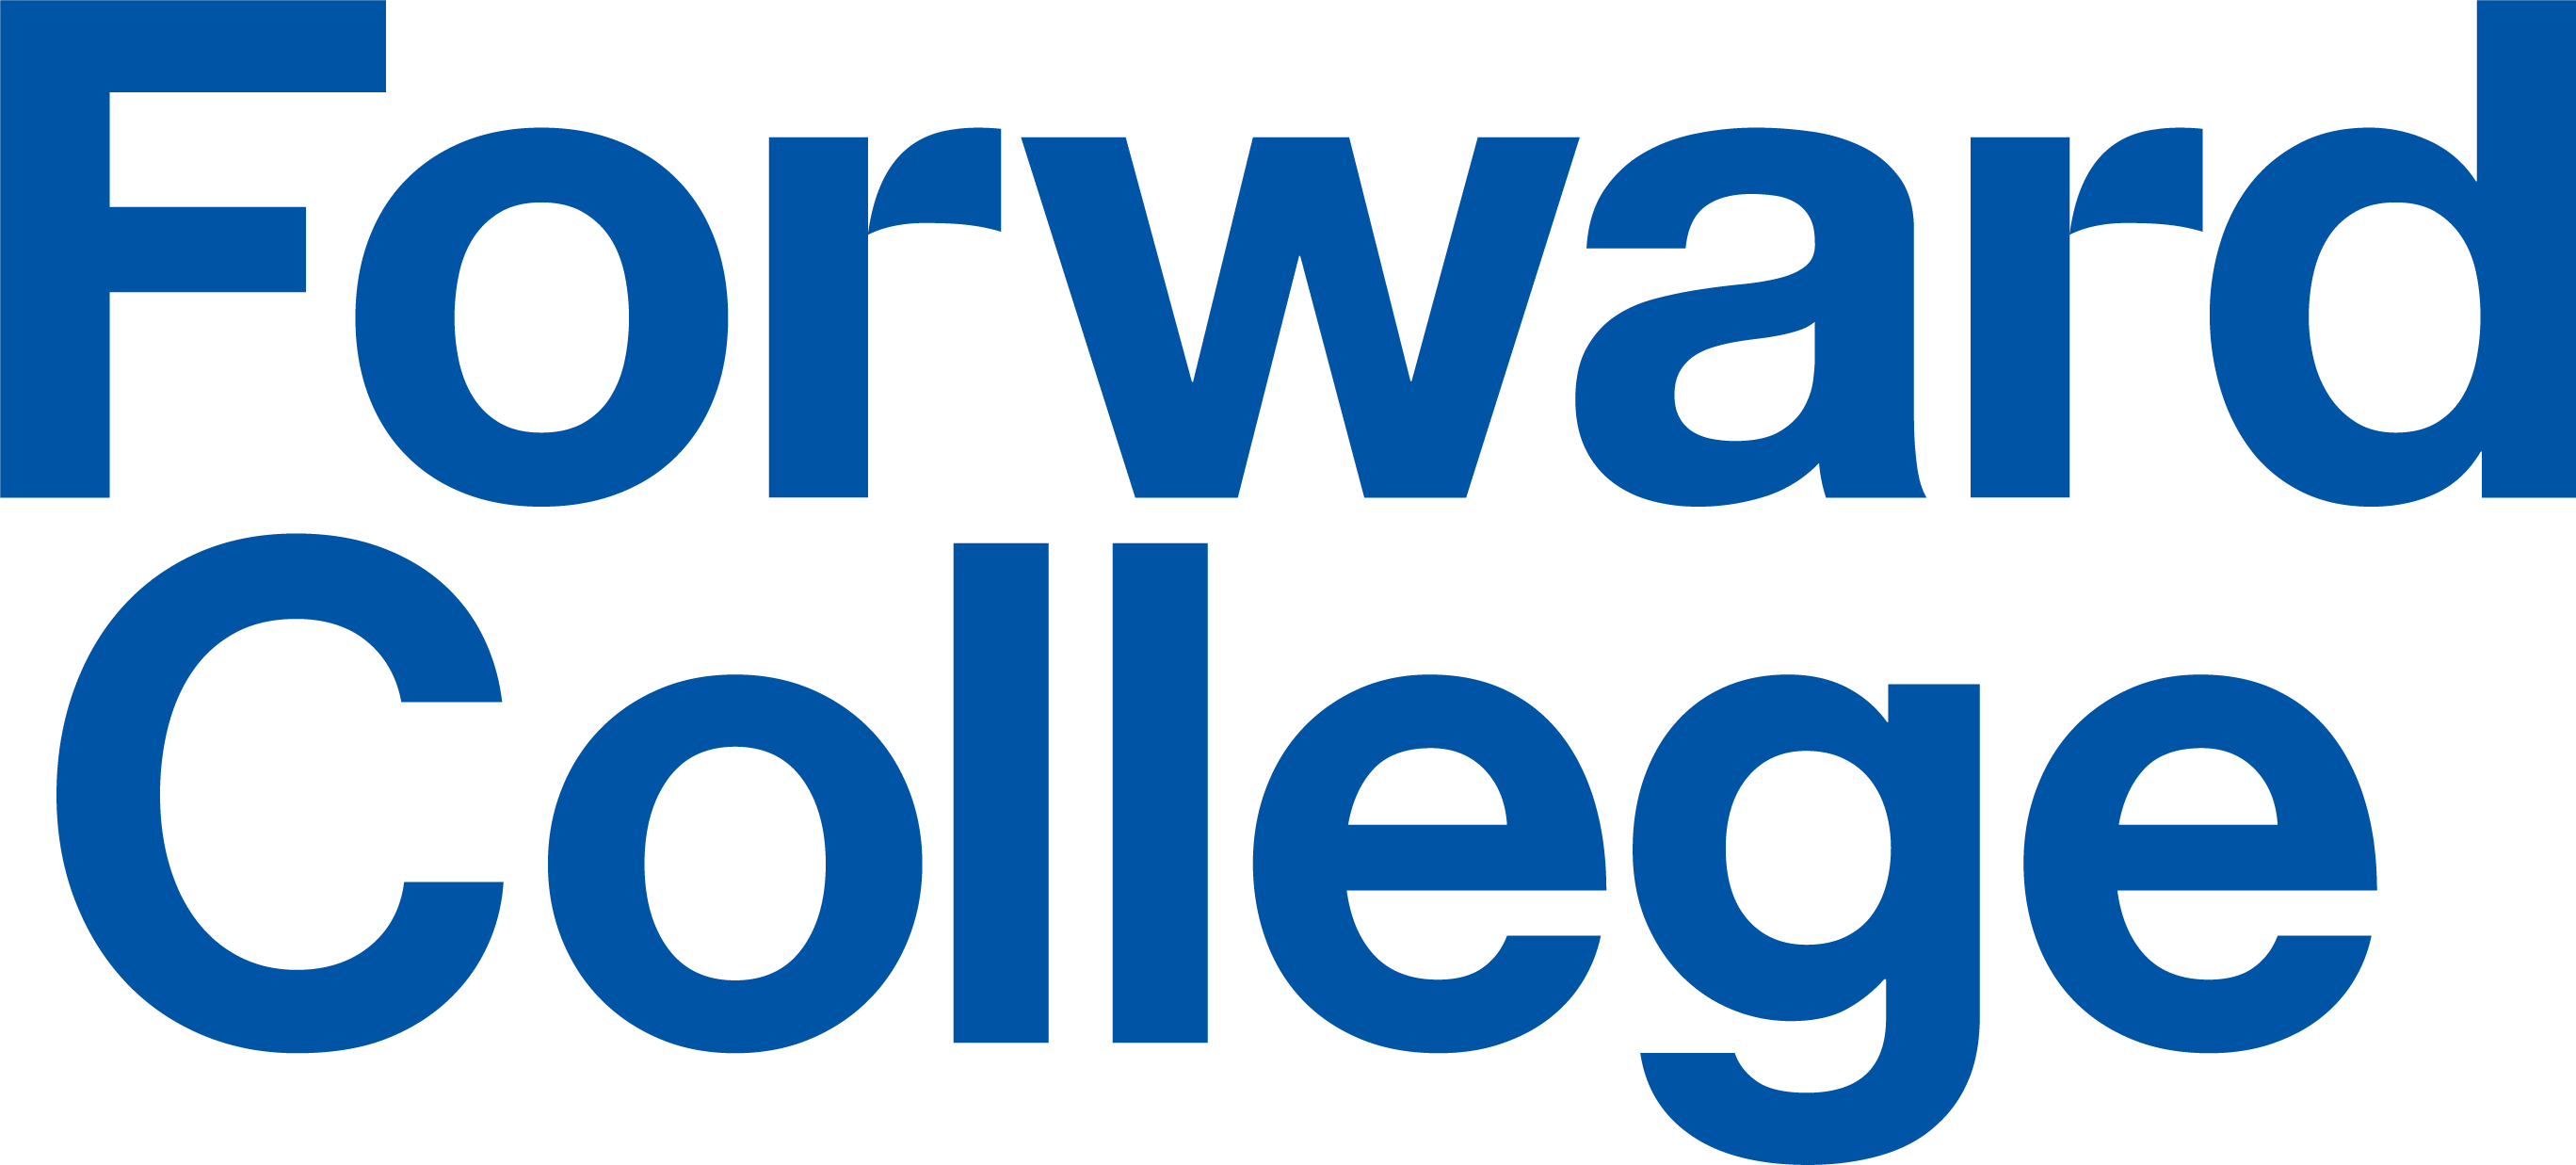 Forward College